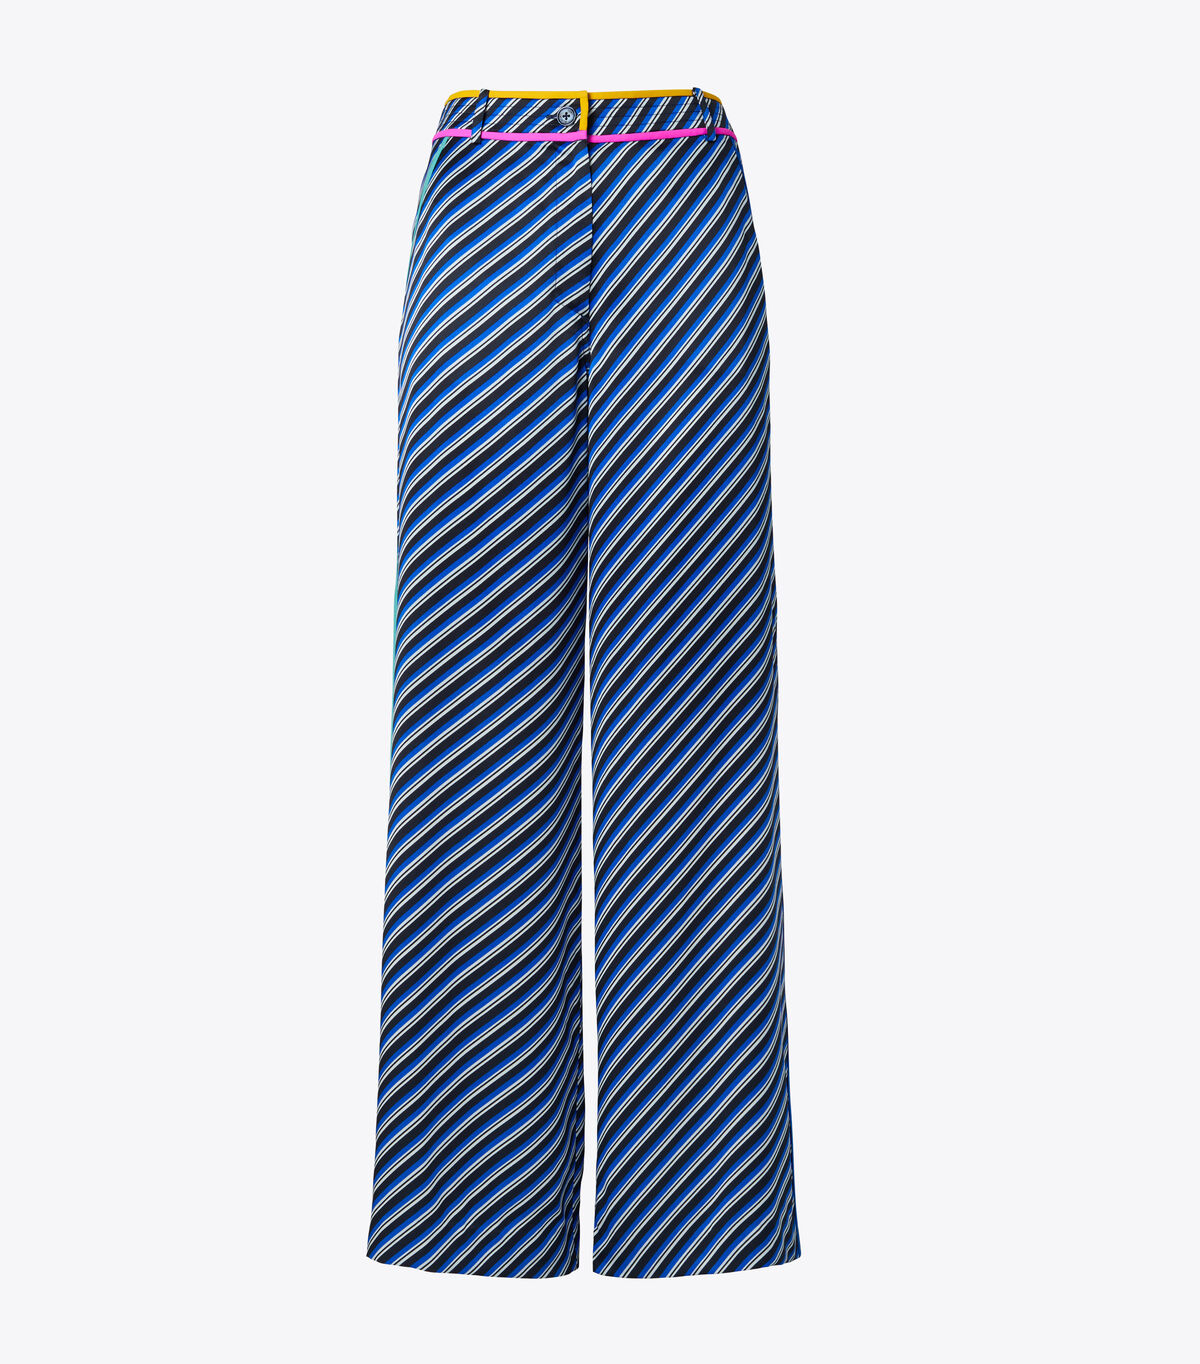 Contrast-Binding Printed Pajama Pant